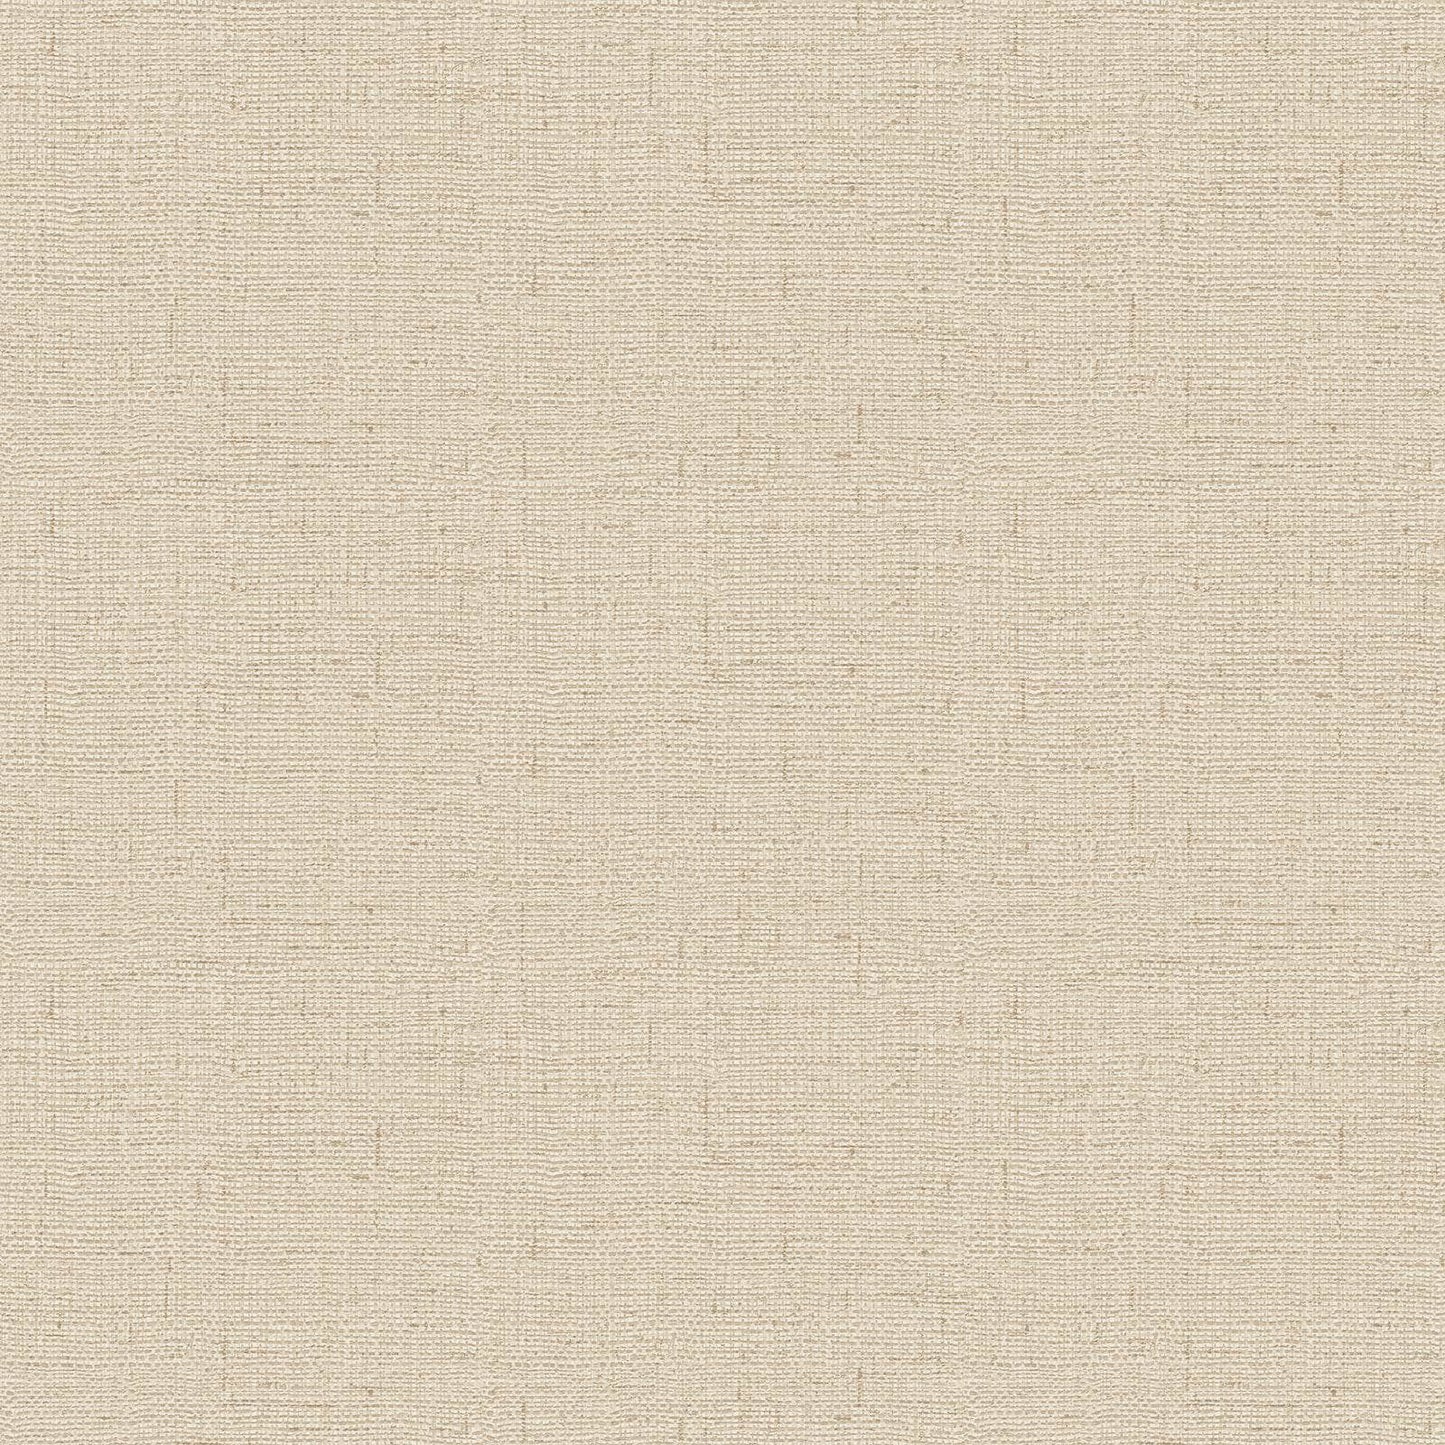  -  Belgravia Maya Cream Textured Wallpaper -  1731  -  60009435